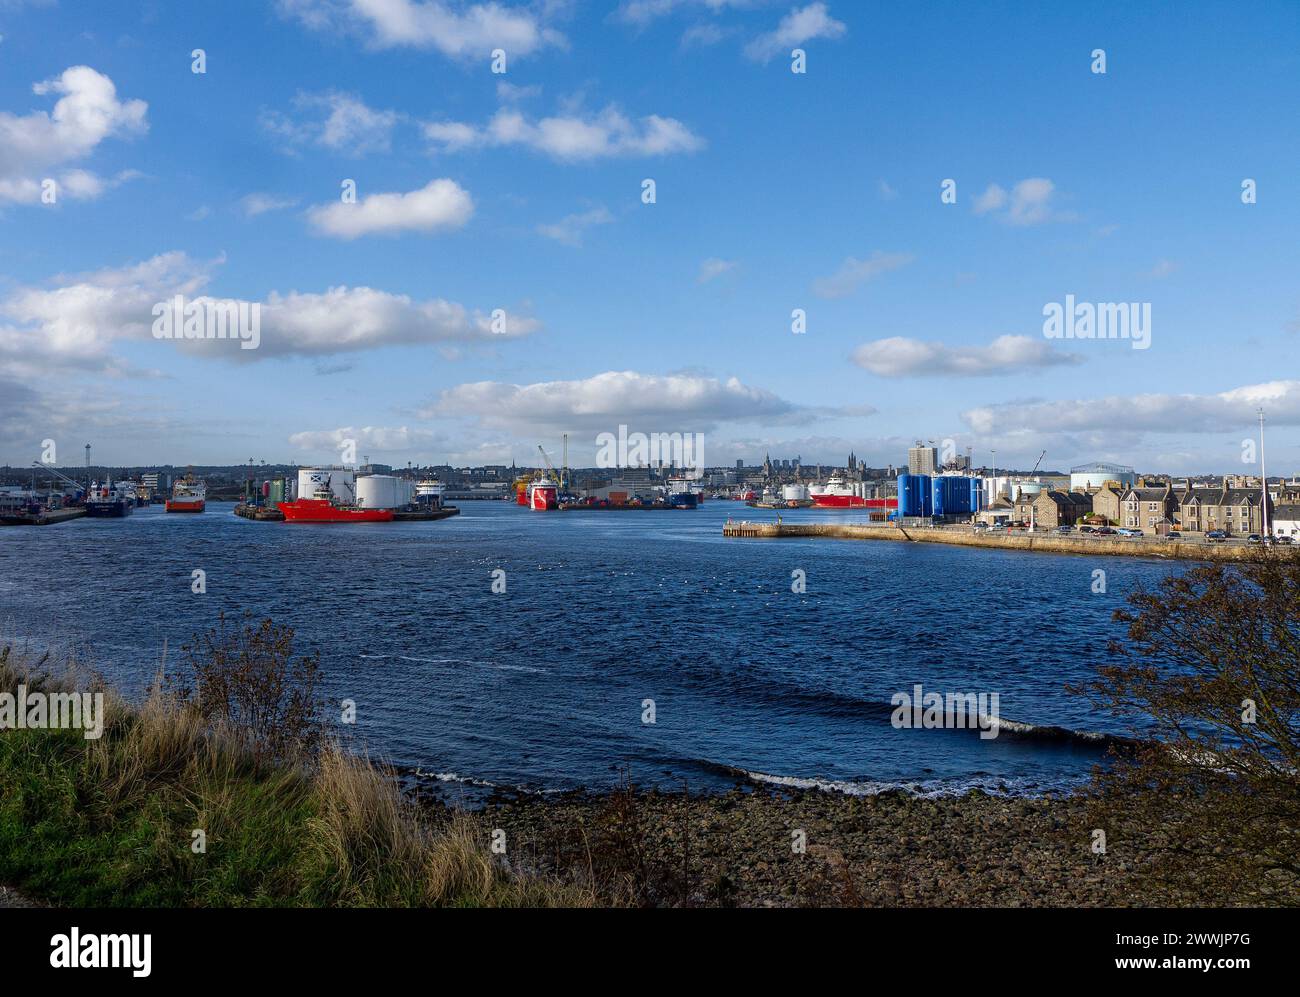 Vista del horizonte de la ciudad de Aberdeen, el puerto de Aberdeen y el puerto de Aberdeen desde Torry Battery, Torry, Aberdeen, Aberdeenshire, Escocia, REINO UNIDO Foto de stock